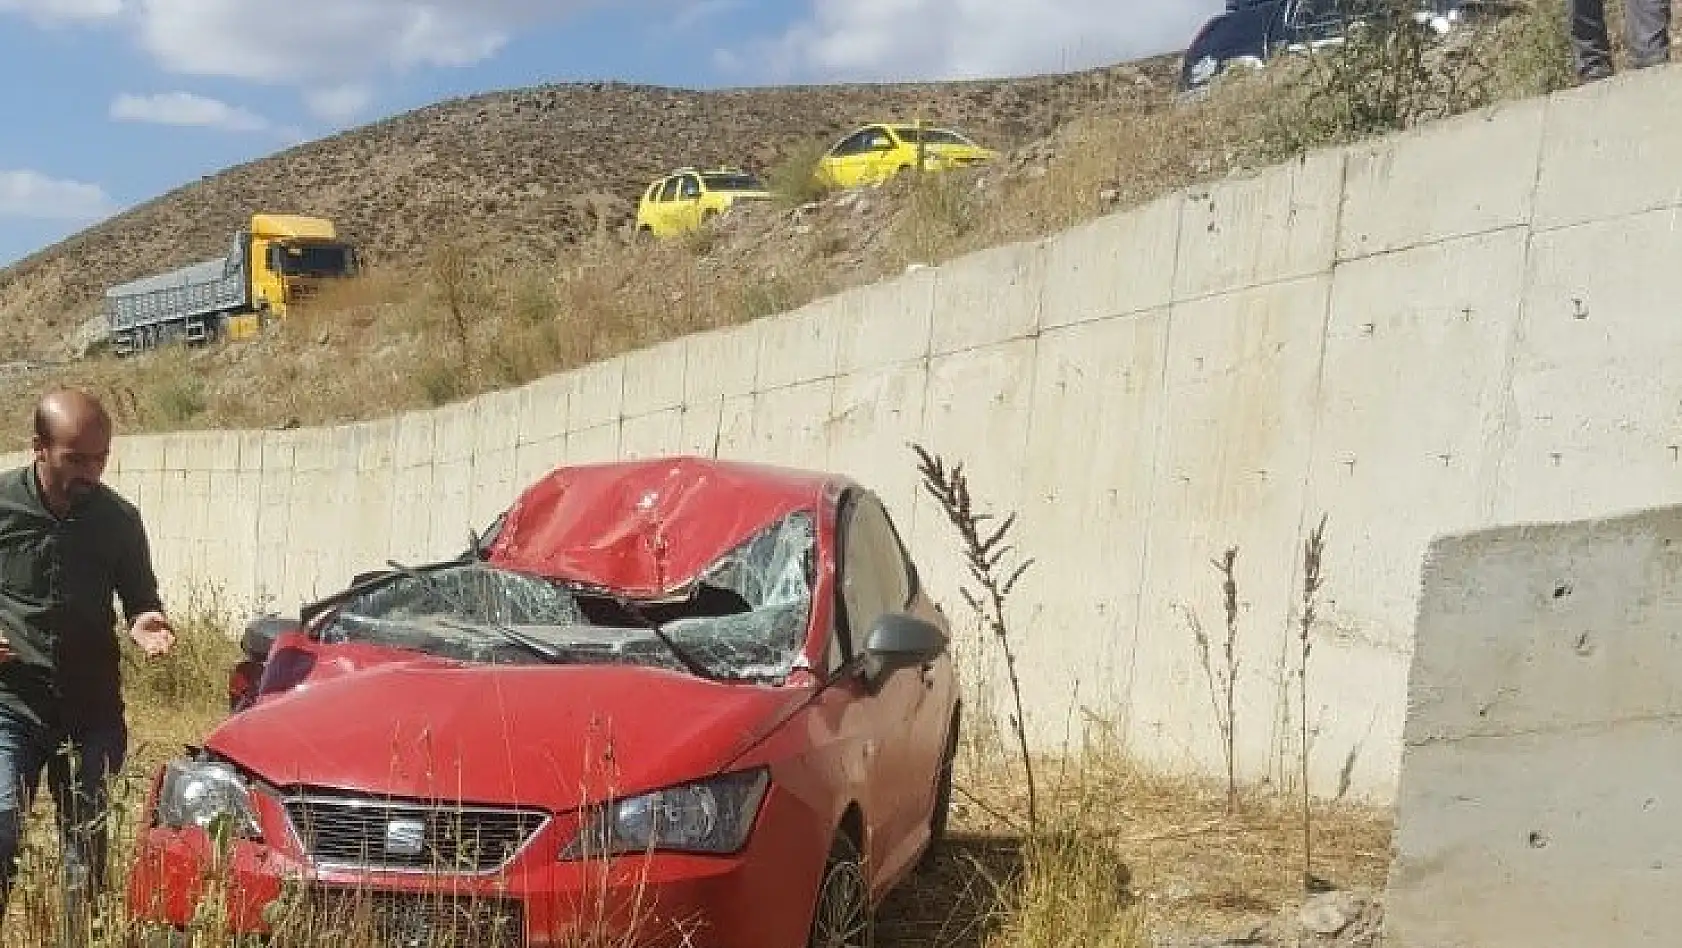 Bingöl'de otomobil şarampole yuvarlandı: 1 yaralı 